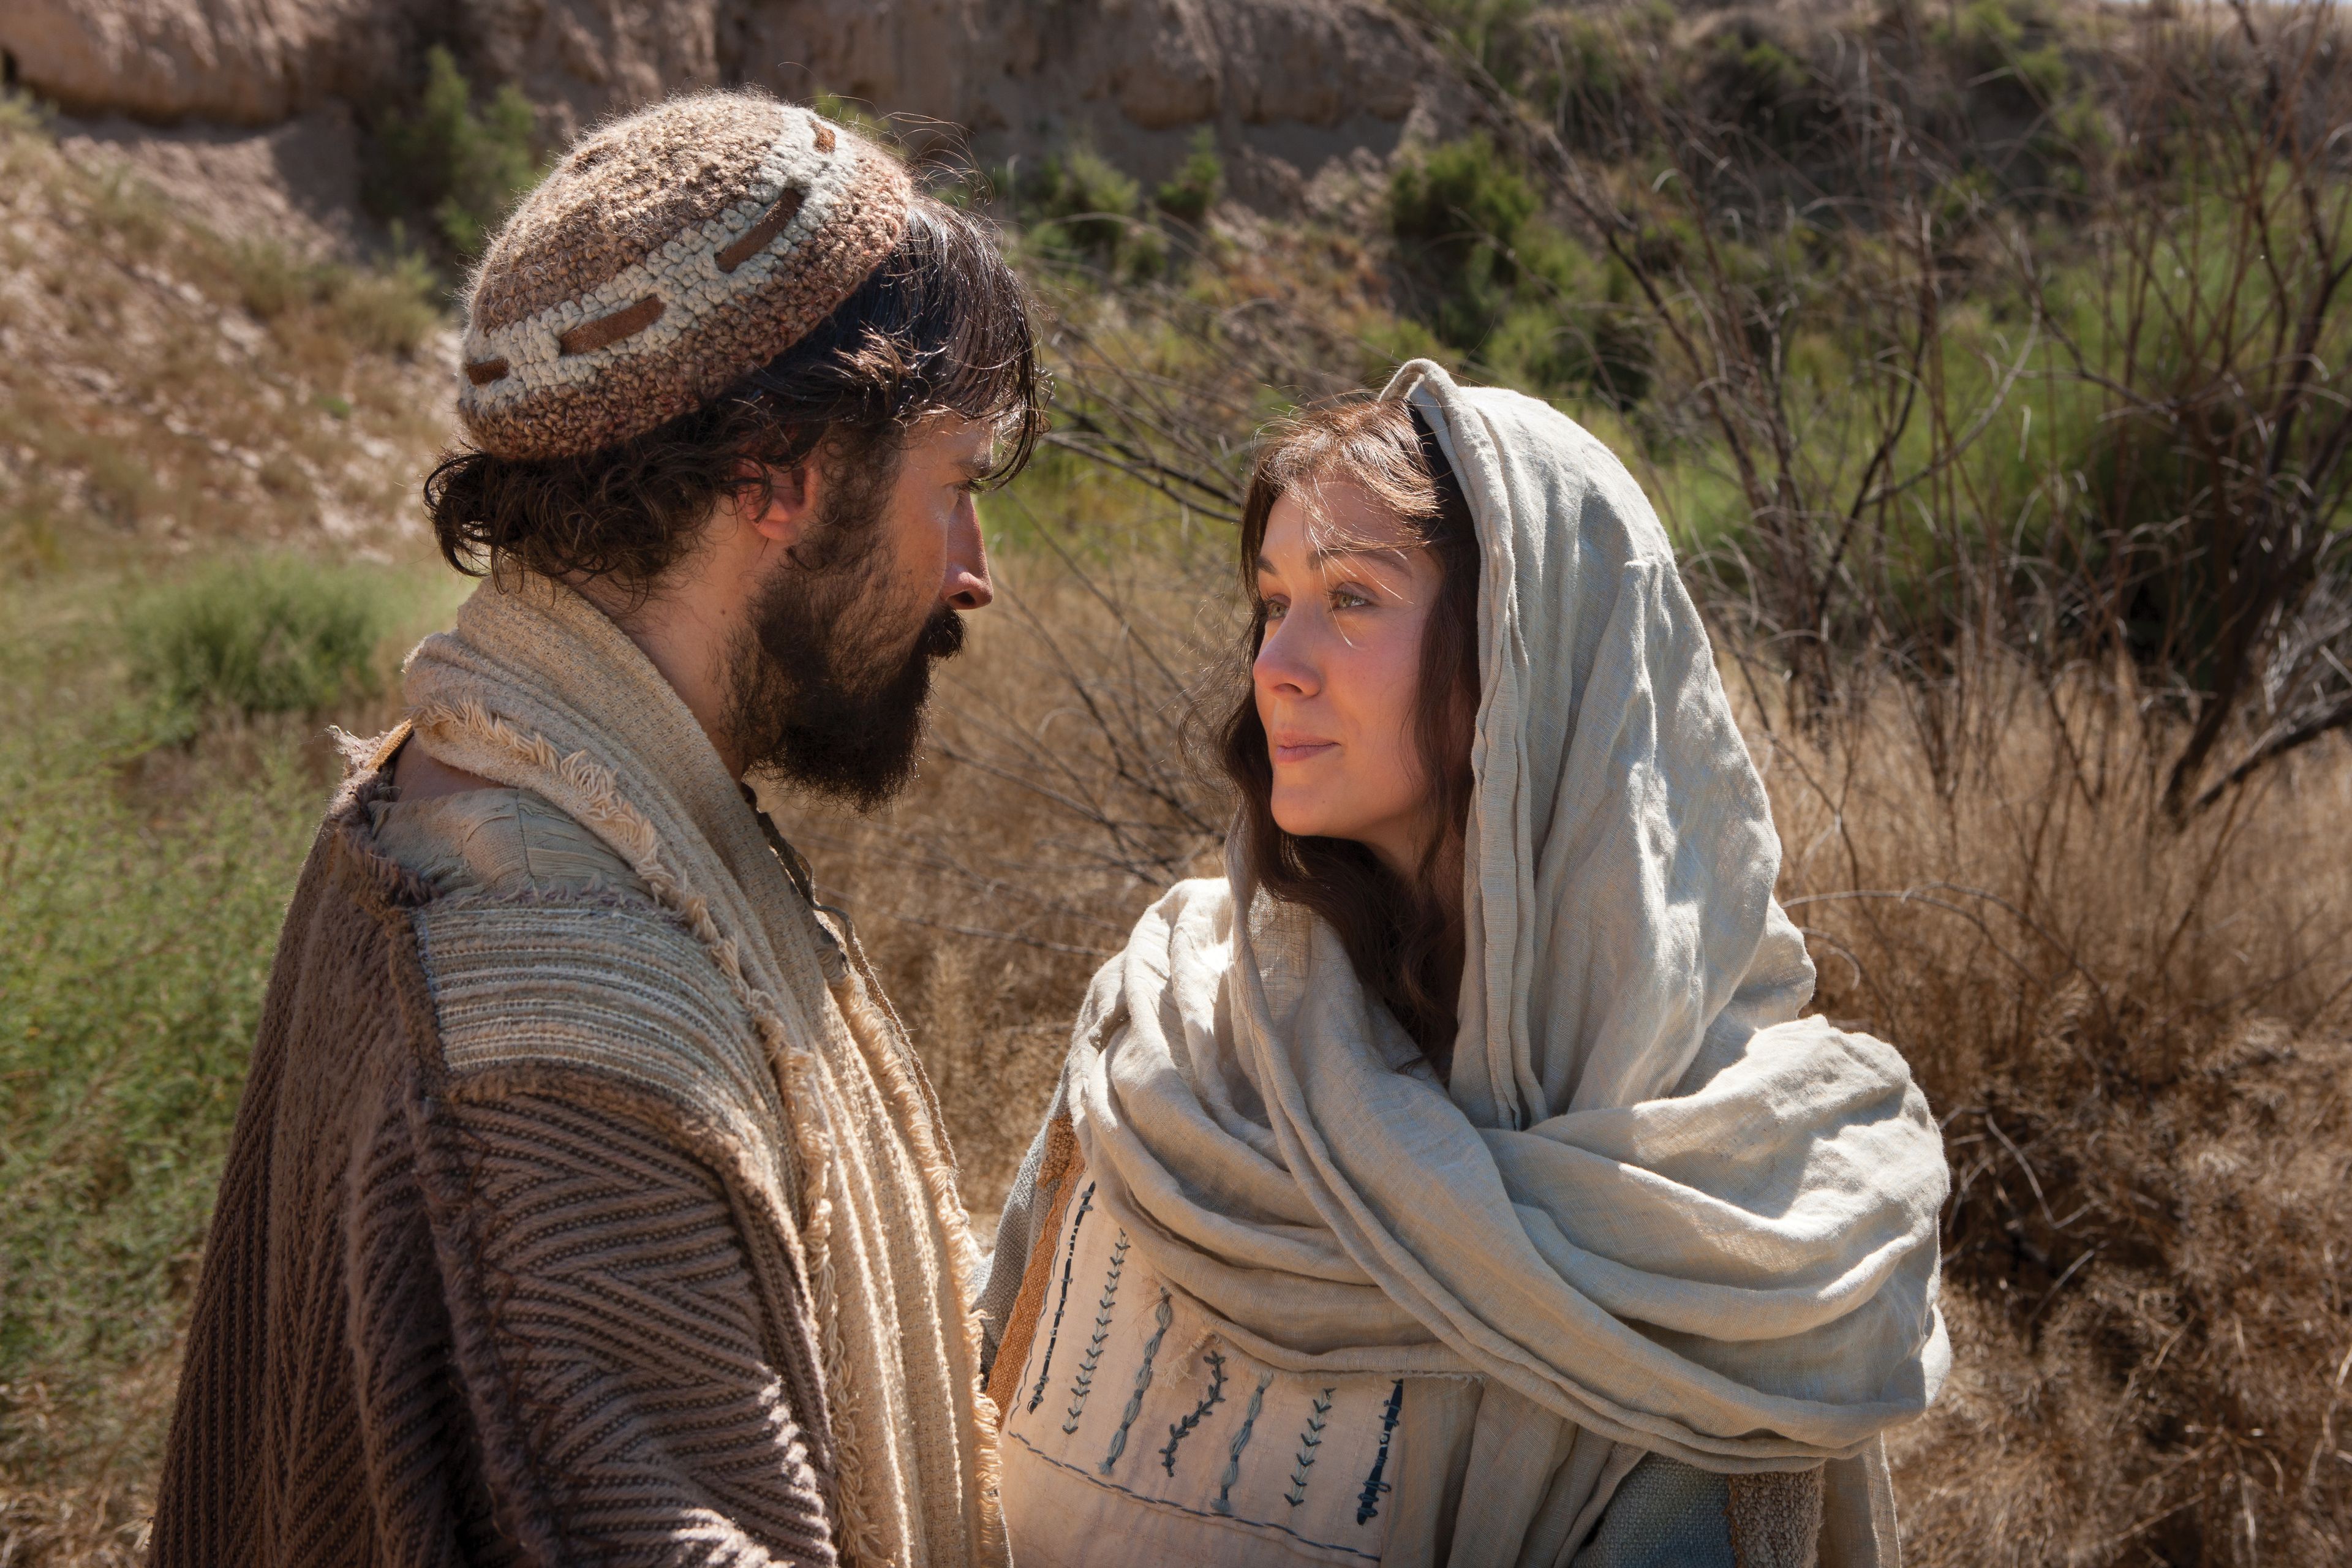 Mary travels with Joseph to Bethlehem.